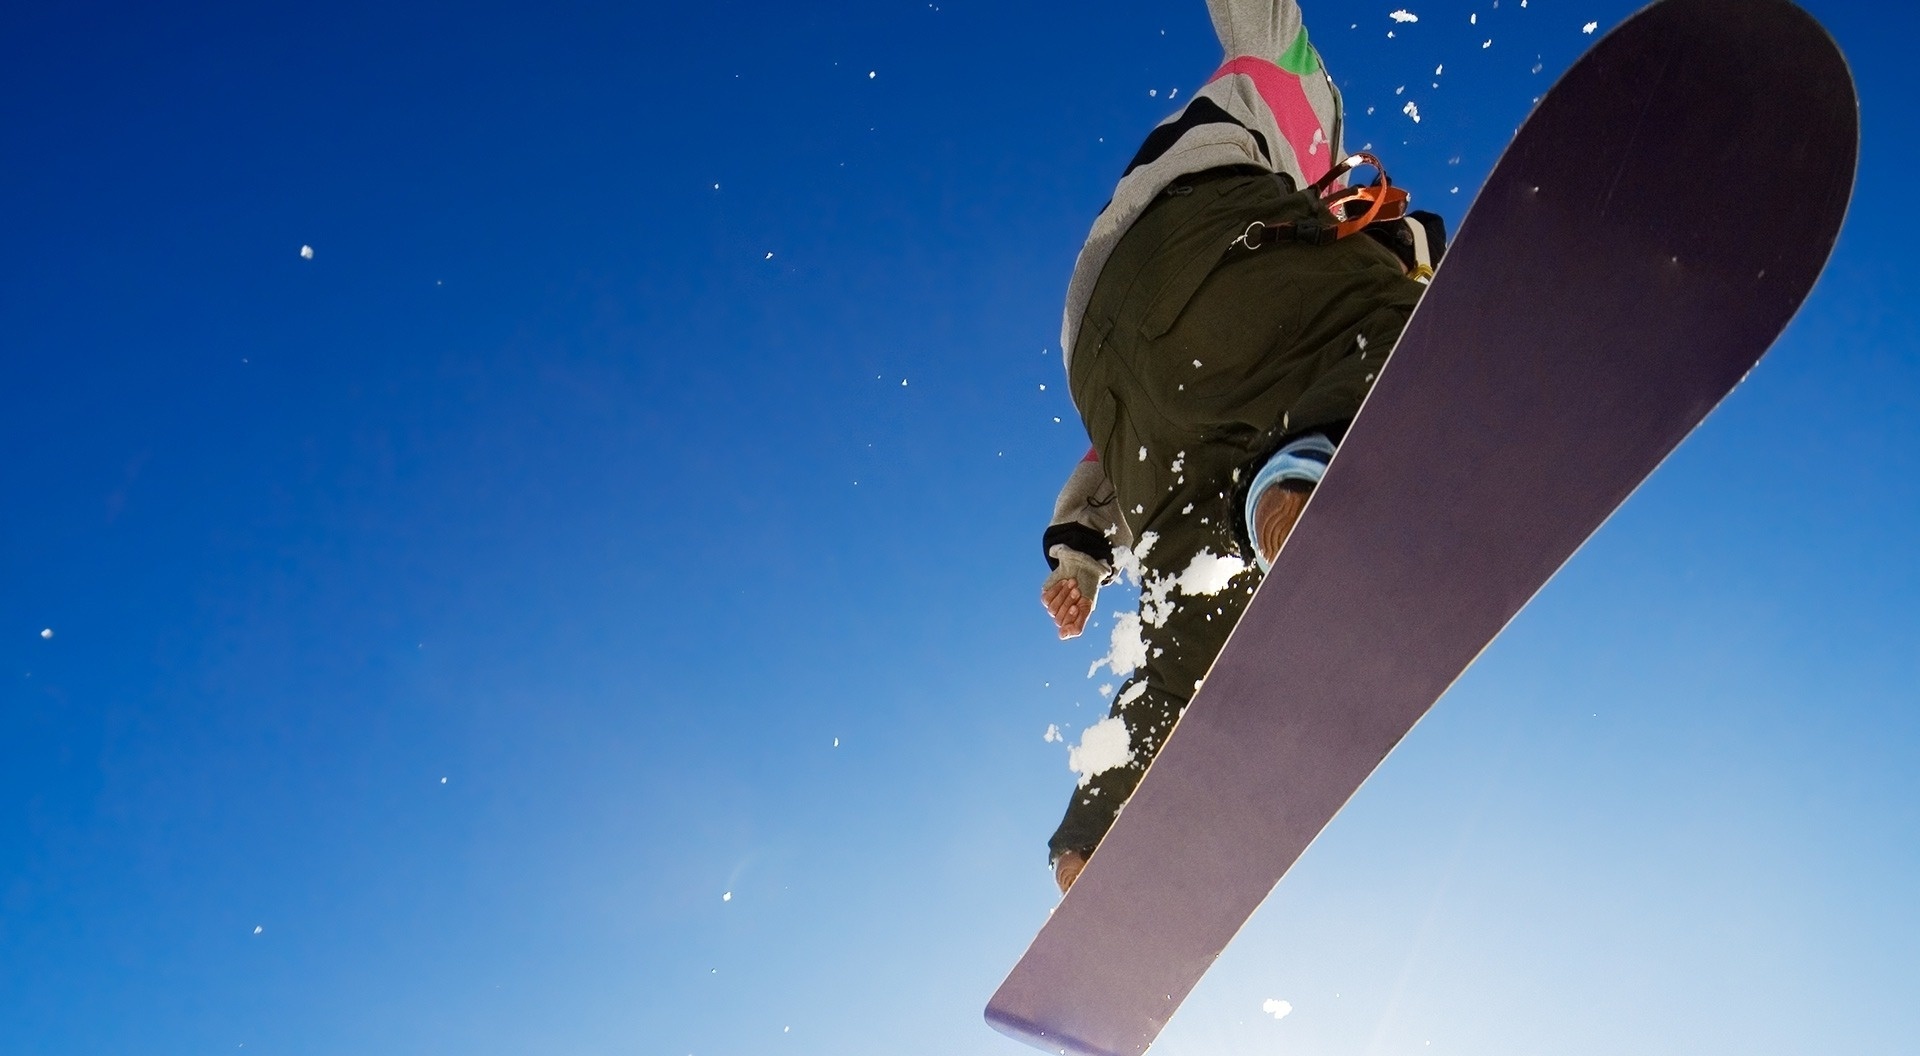 snowboarding, sports